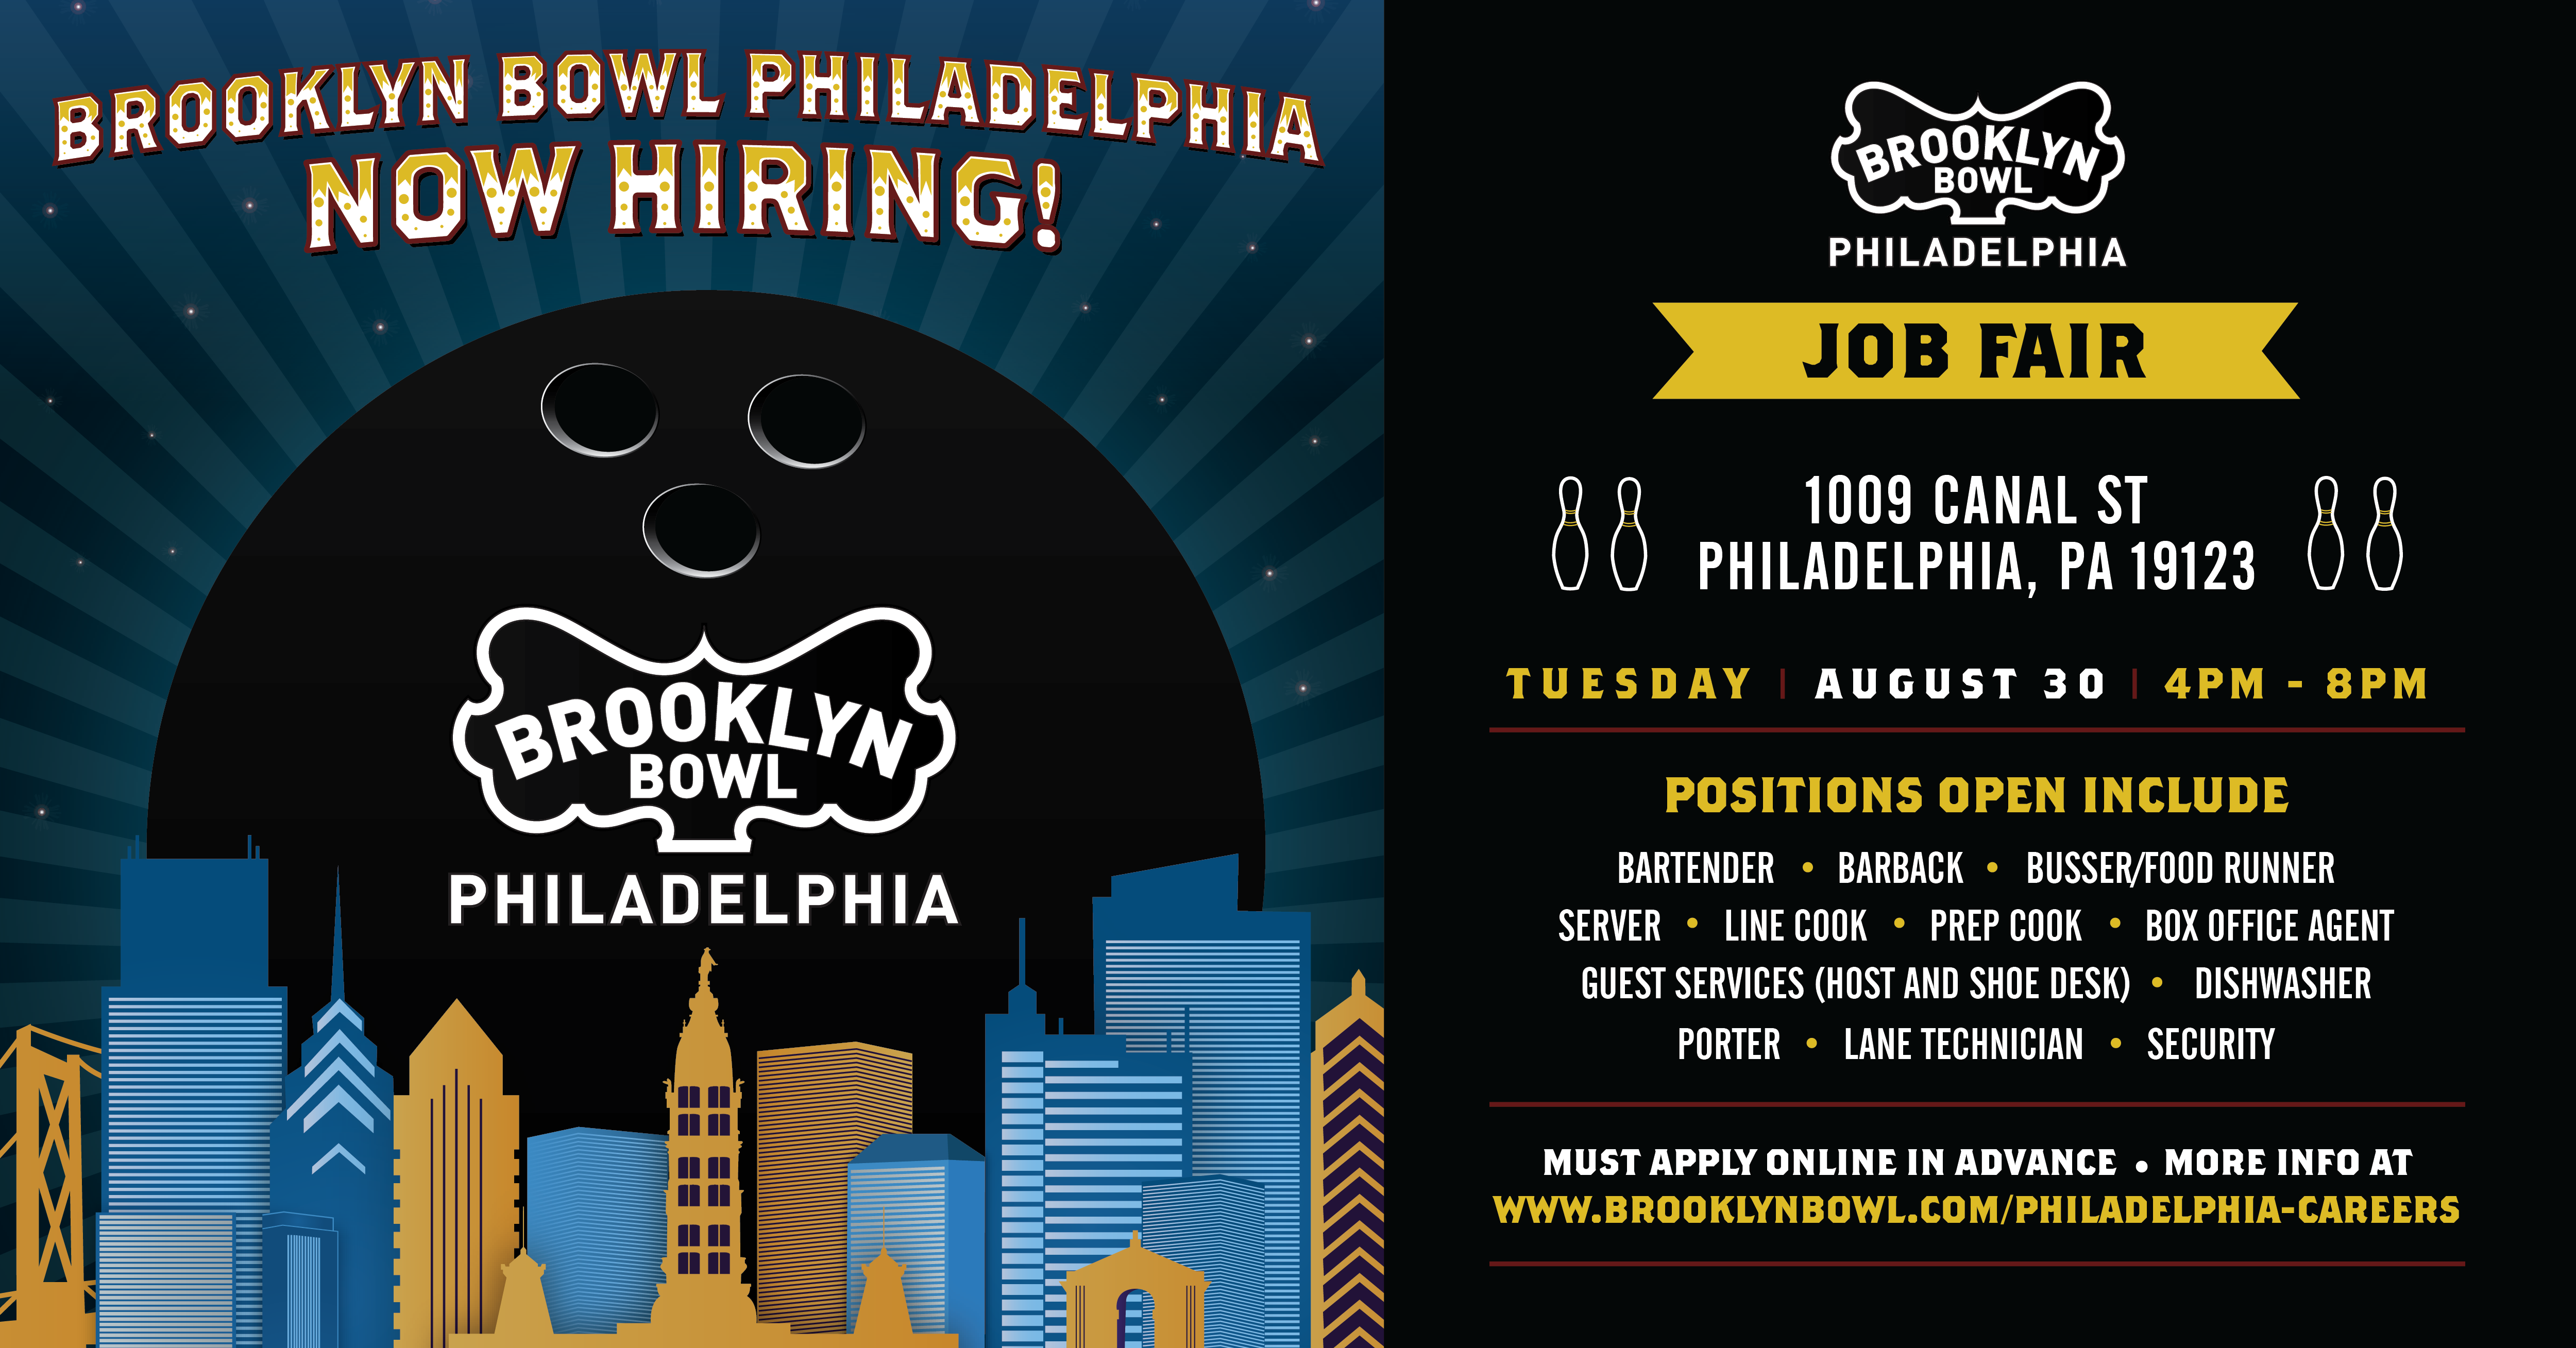 More Info for Brooklyn Bowl Philadelphia Job Fair